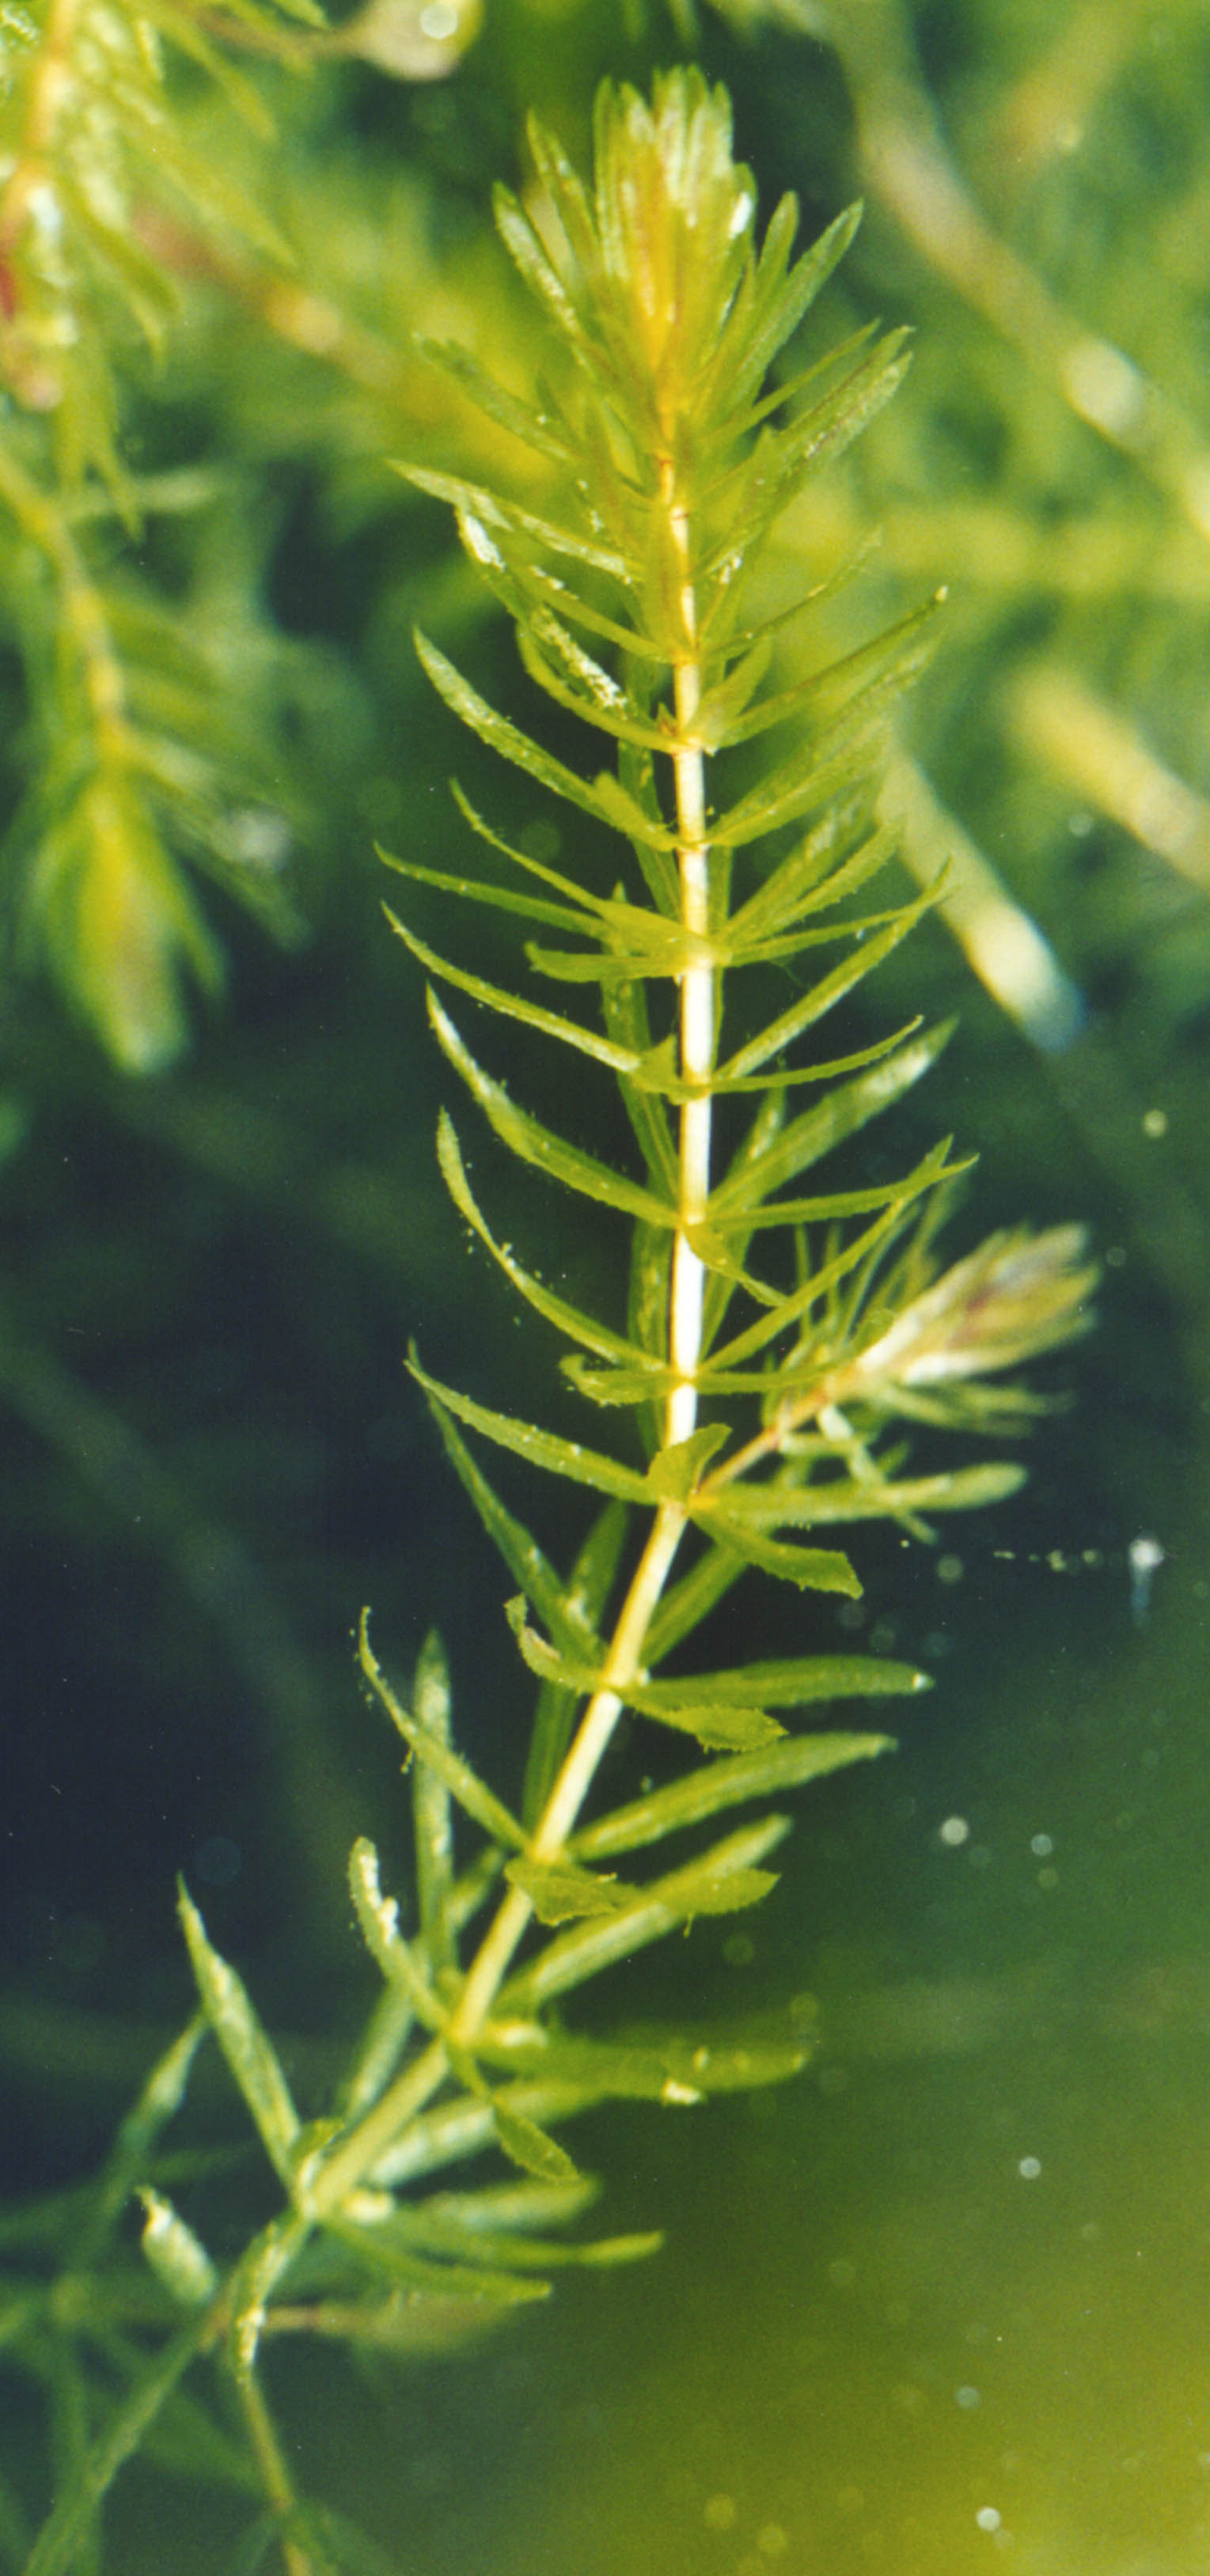 hydrilla aquatic verticillata grow edu stem leaves royle scientific freshwater shakeology around ecology